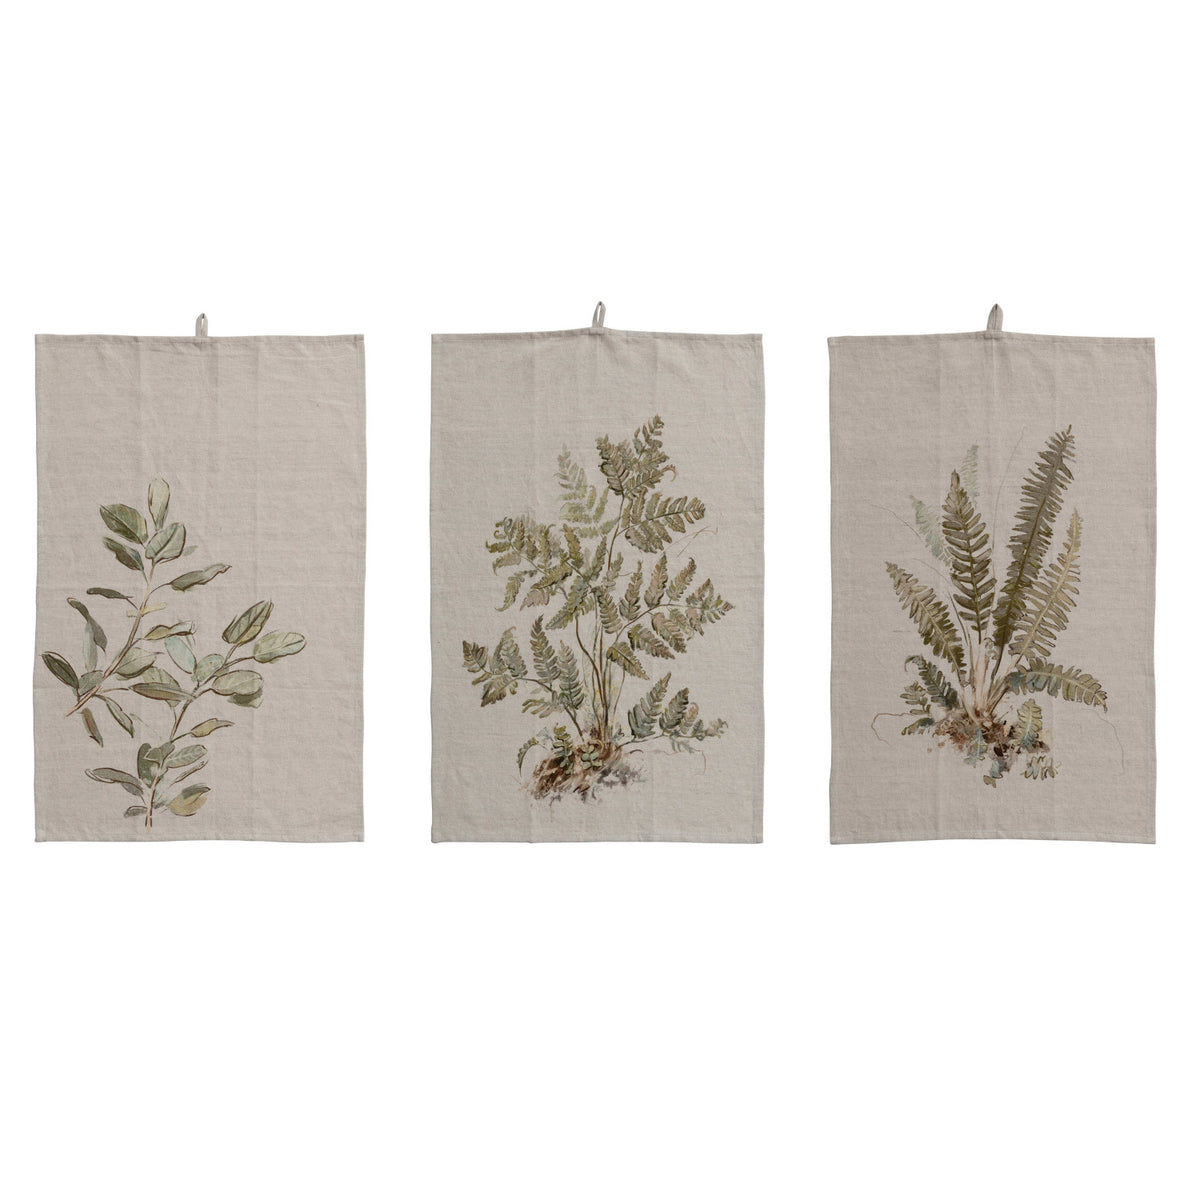 Cotton & Linen Printed Tea Towel w/ Botanical Image & Loop